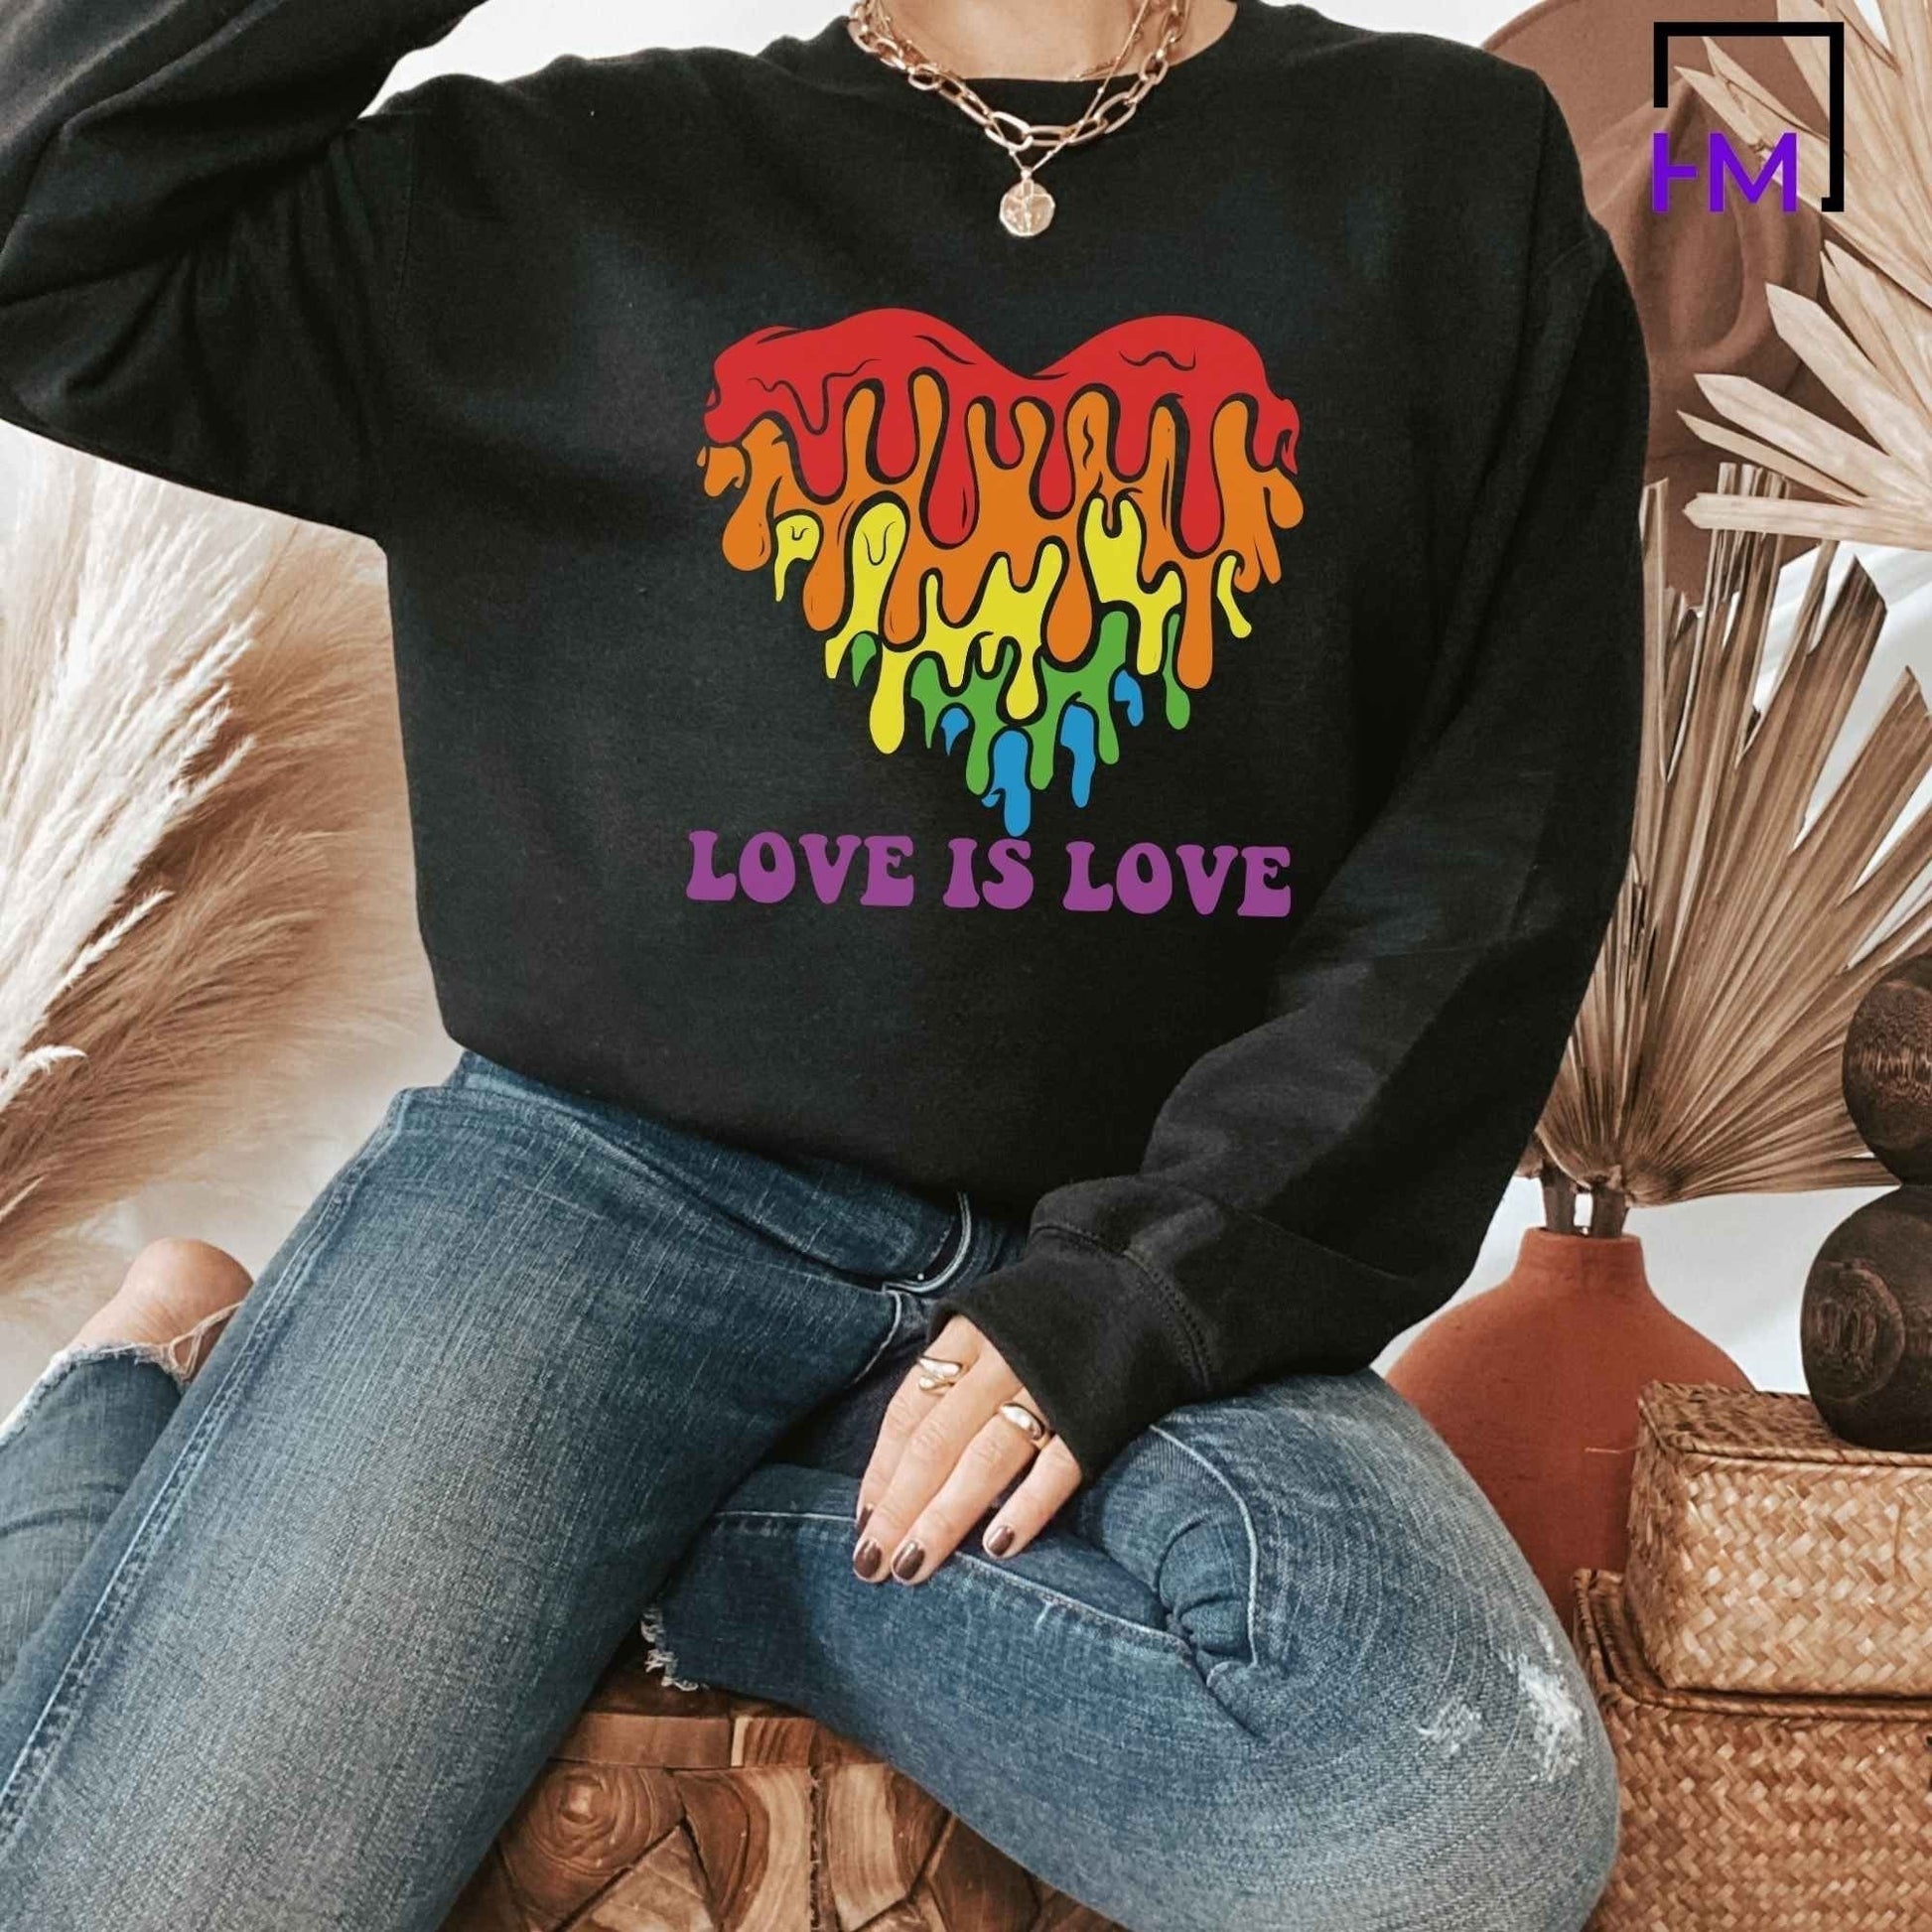 Love is Love Shirt, Love Wins Tie Dye Shirt, Love Always Wins T-Shirt, Women's Love Wins Heart Tee, LGBTQ Support Shirts, LGBTQ Pride Shirts